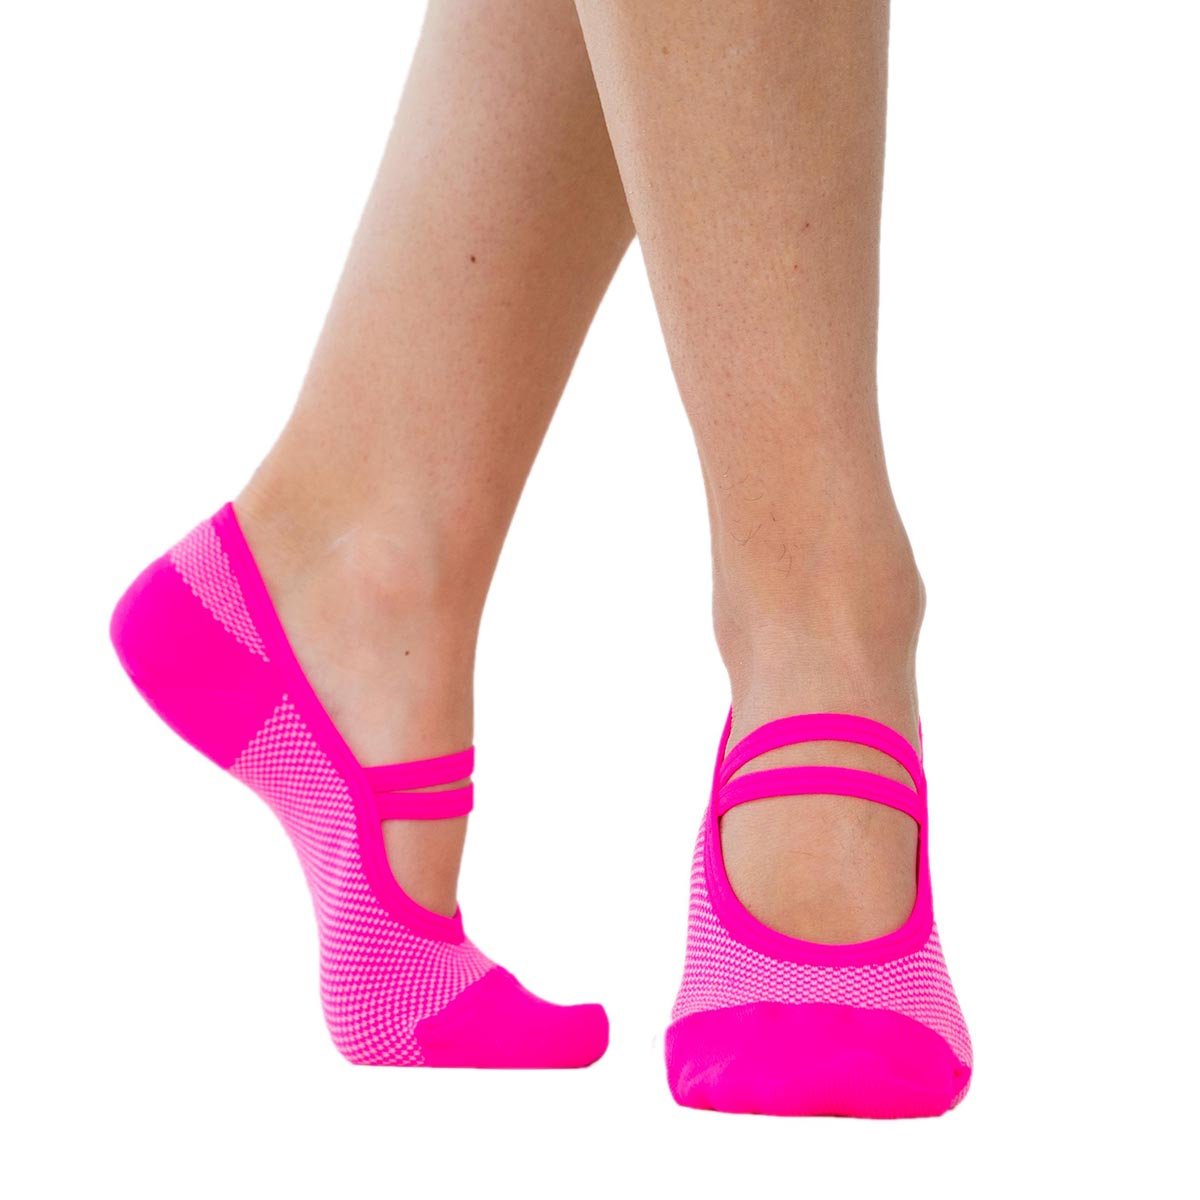 Buy Sticky Grip Socks for Barre, Pilates, Lagree, Yoga, Dance